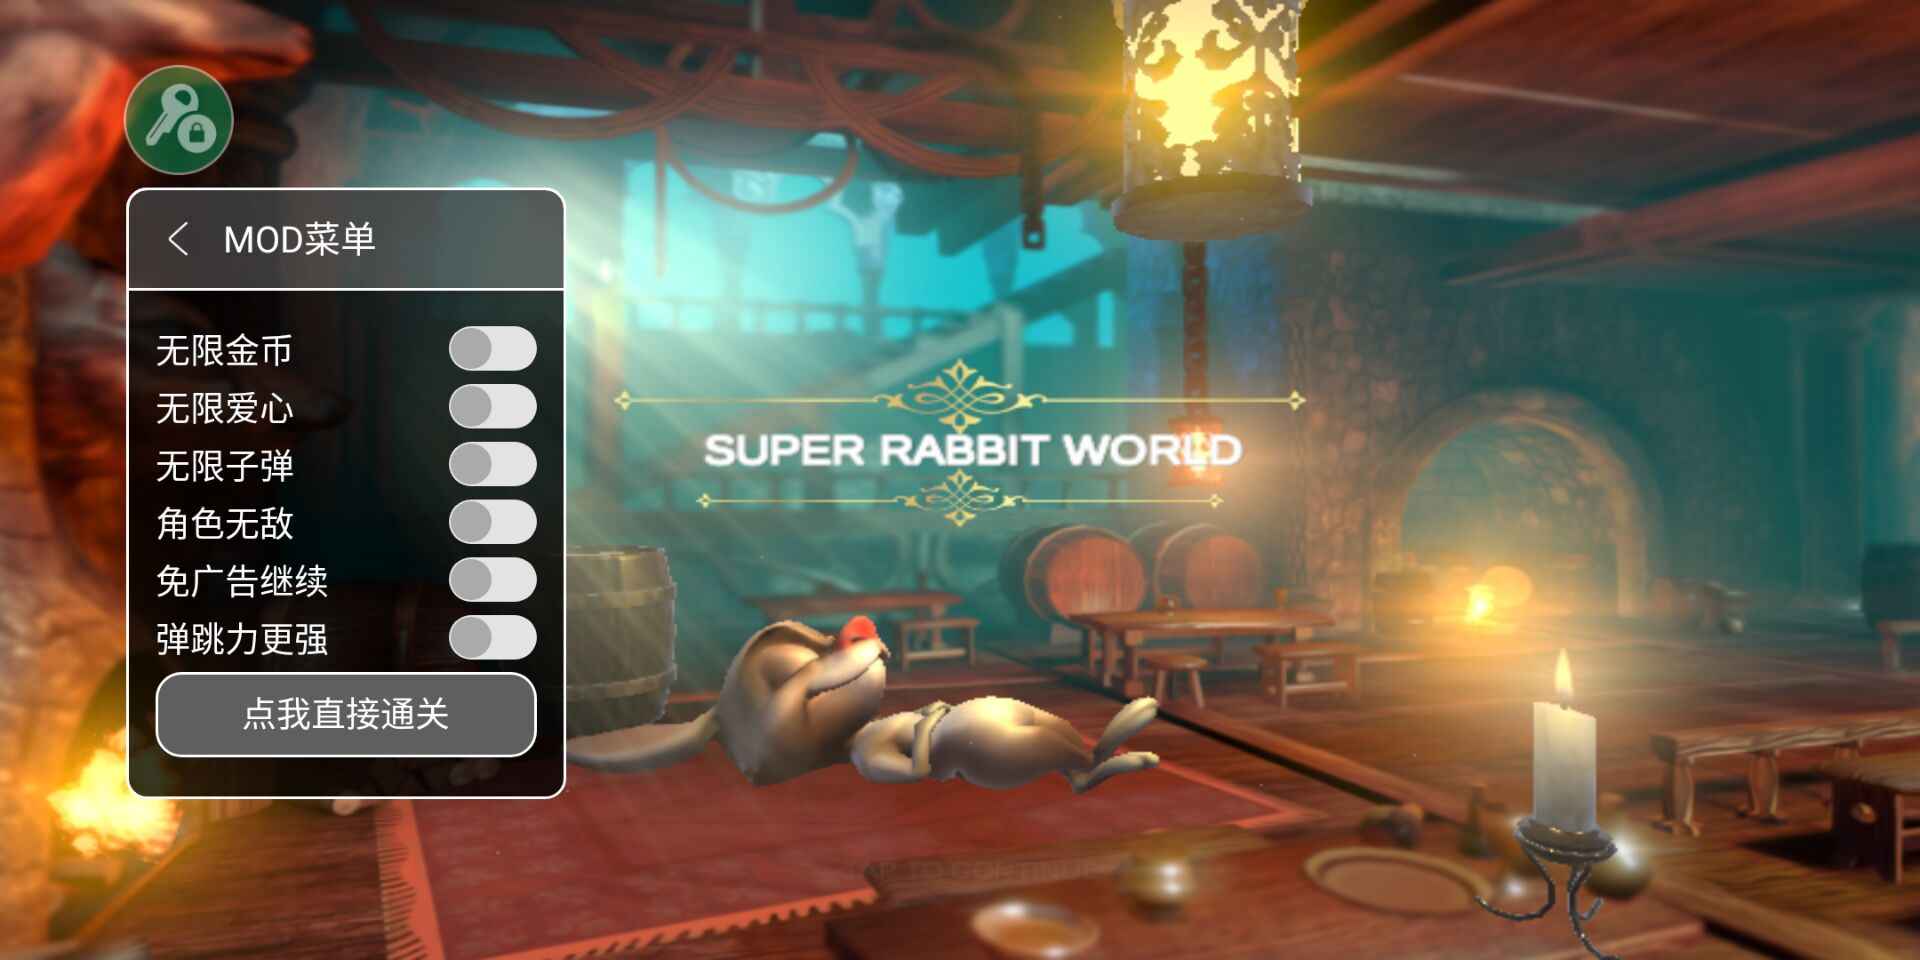 (Super Rabbit World Adventure)